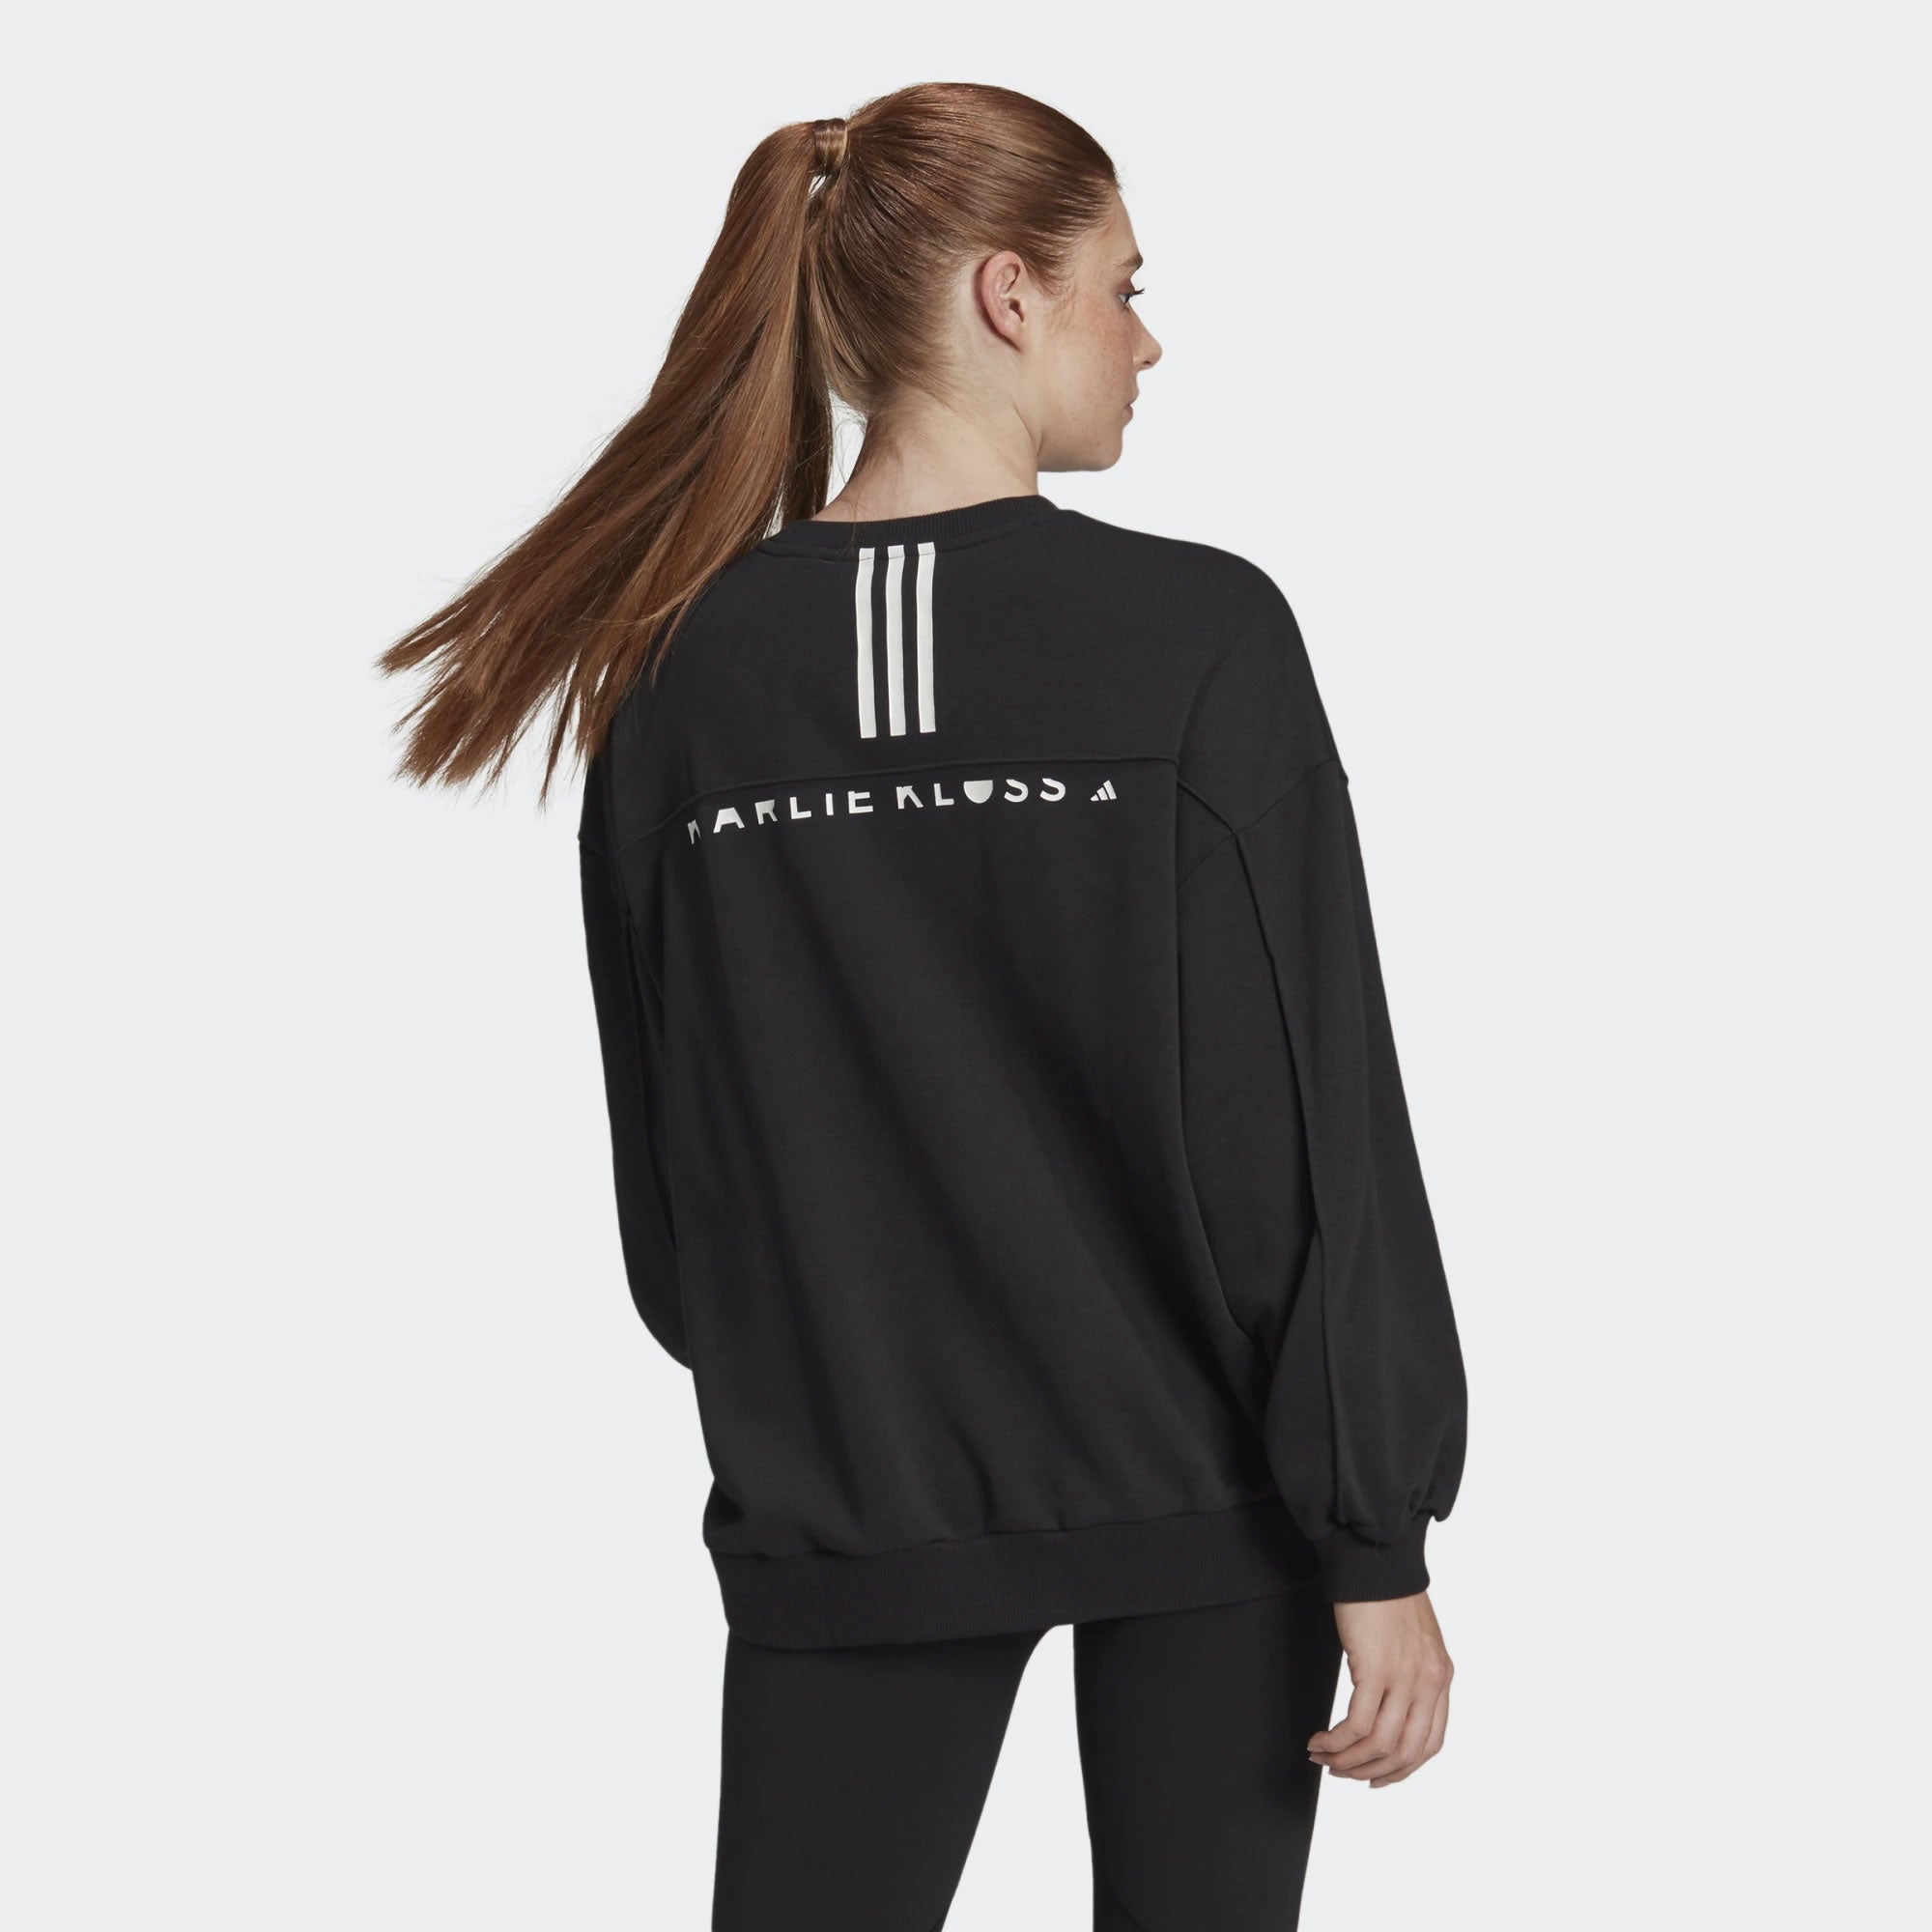 tradesports.co.uk Adidas Women's Karlie Kloss Crew Sweatshirt - Black